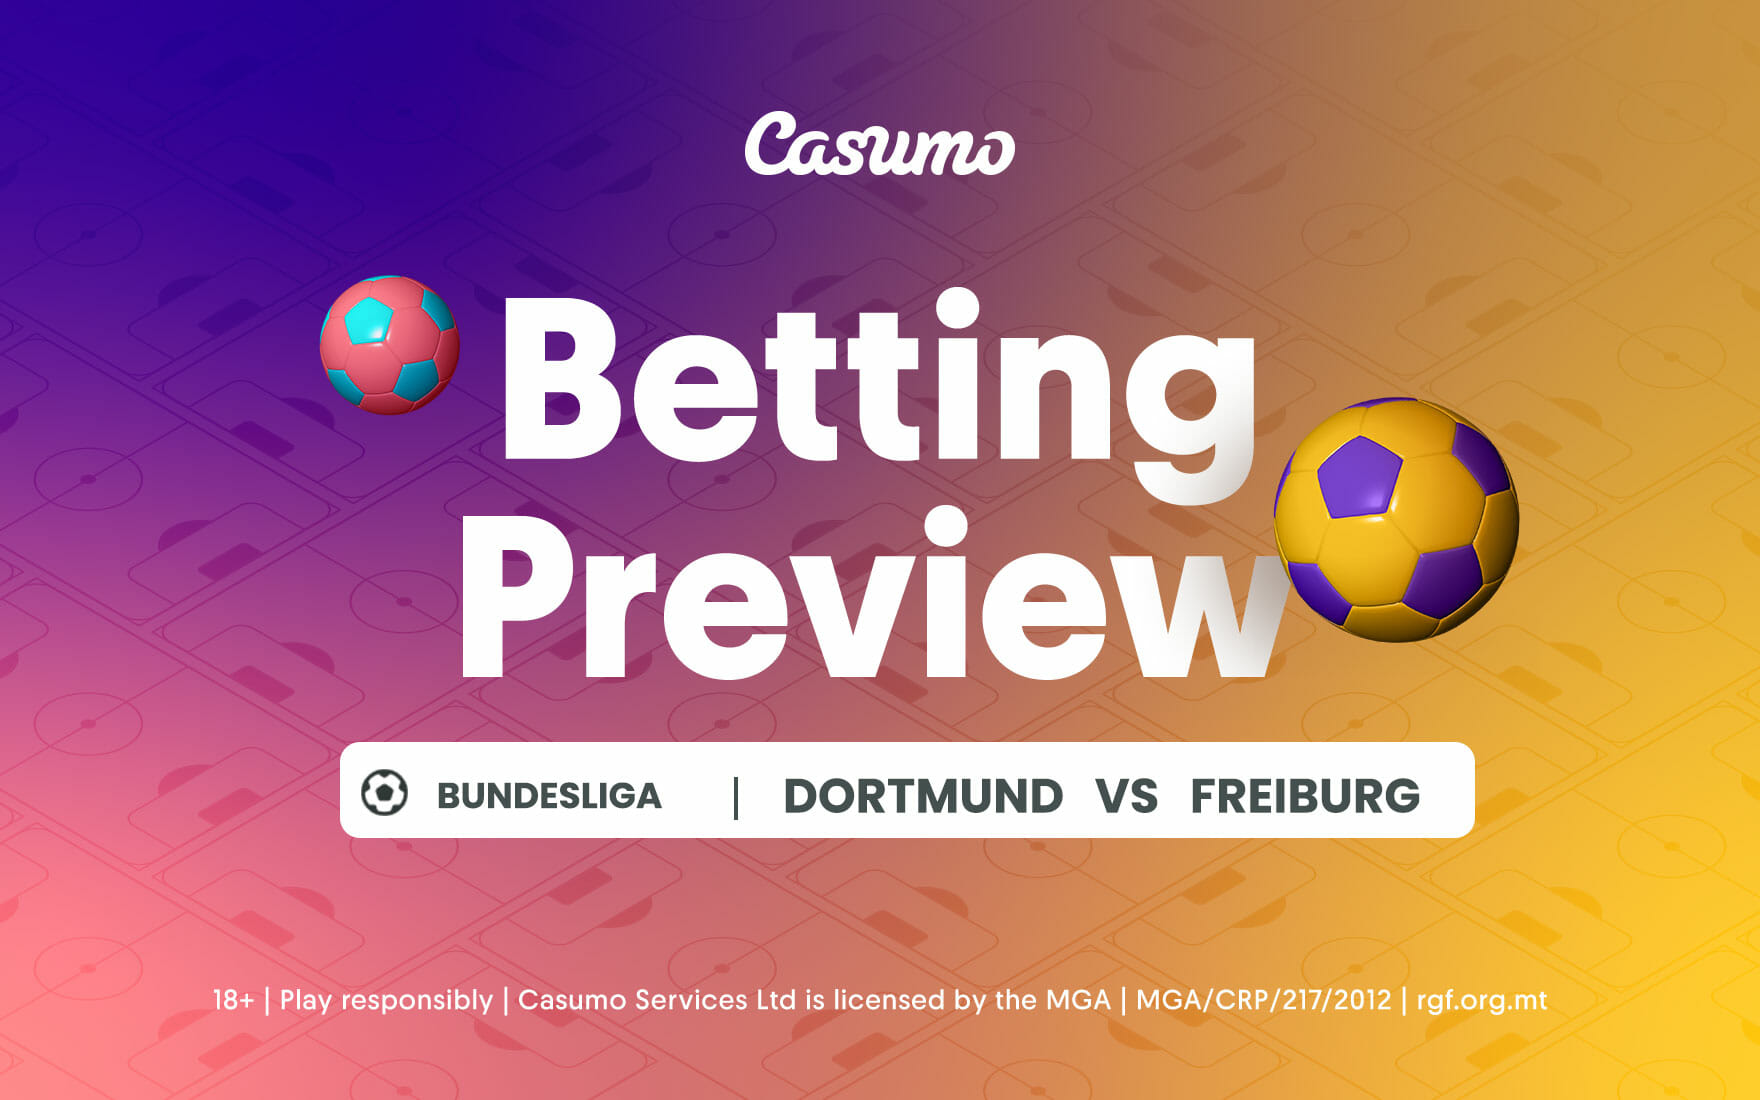 Dortmund vs Freiburg betting tips